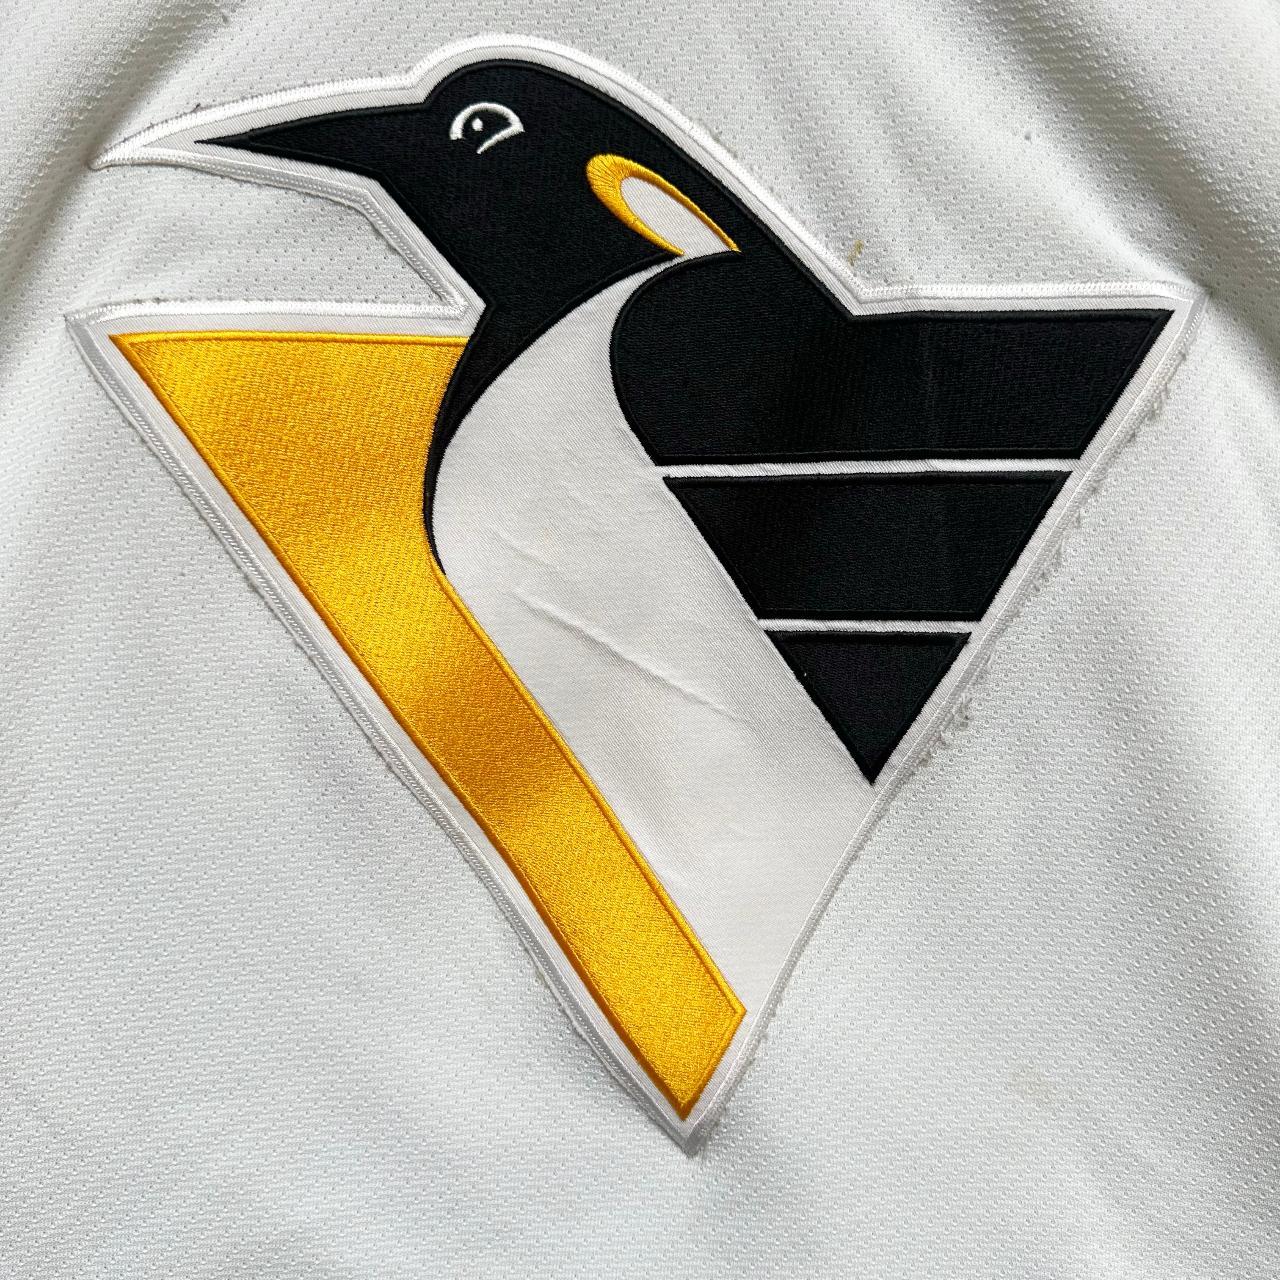 Vintage CCM Pittsburgh Penguins Sportswear Hockey - Depop